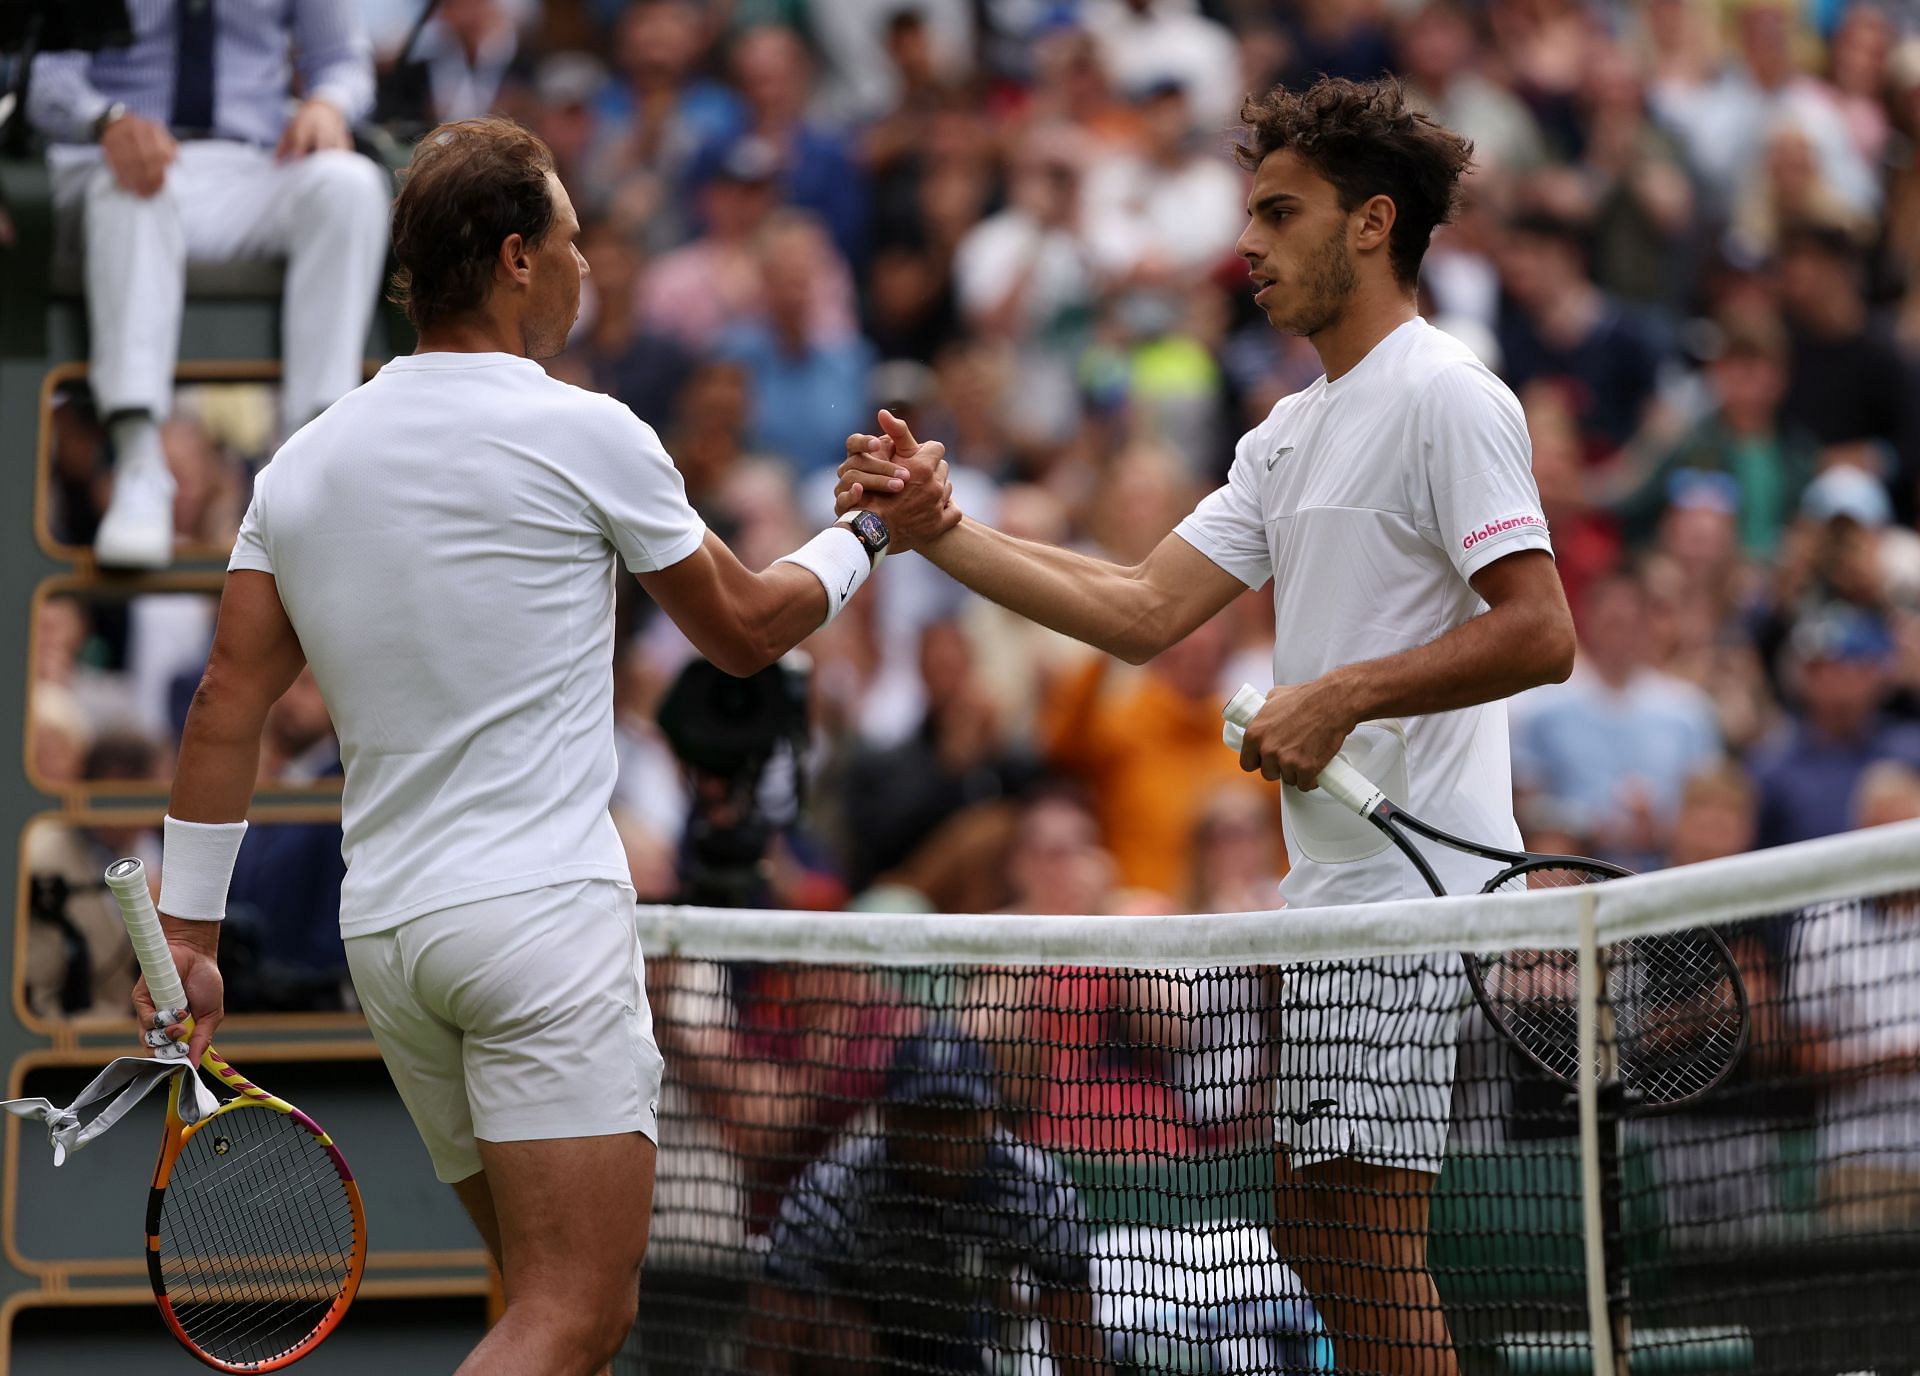 Rafael Nadal beat Francisco Cerundolo in the first round of Wimbledon